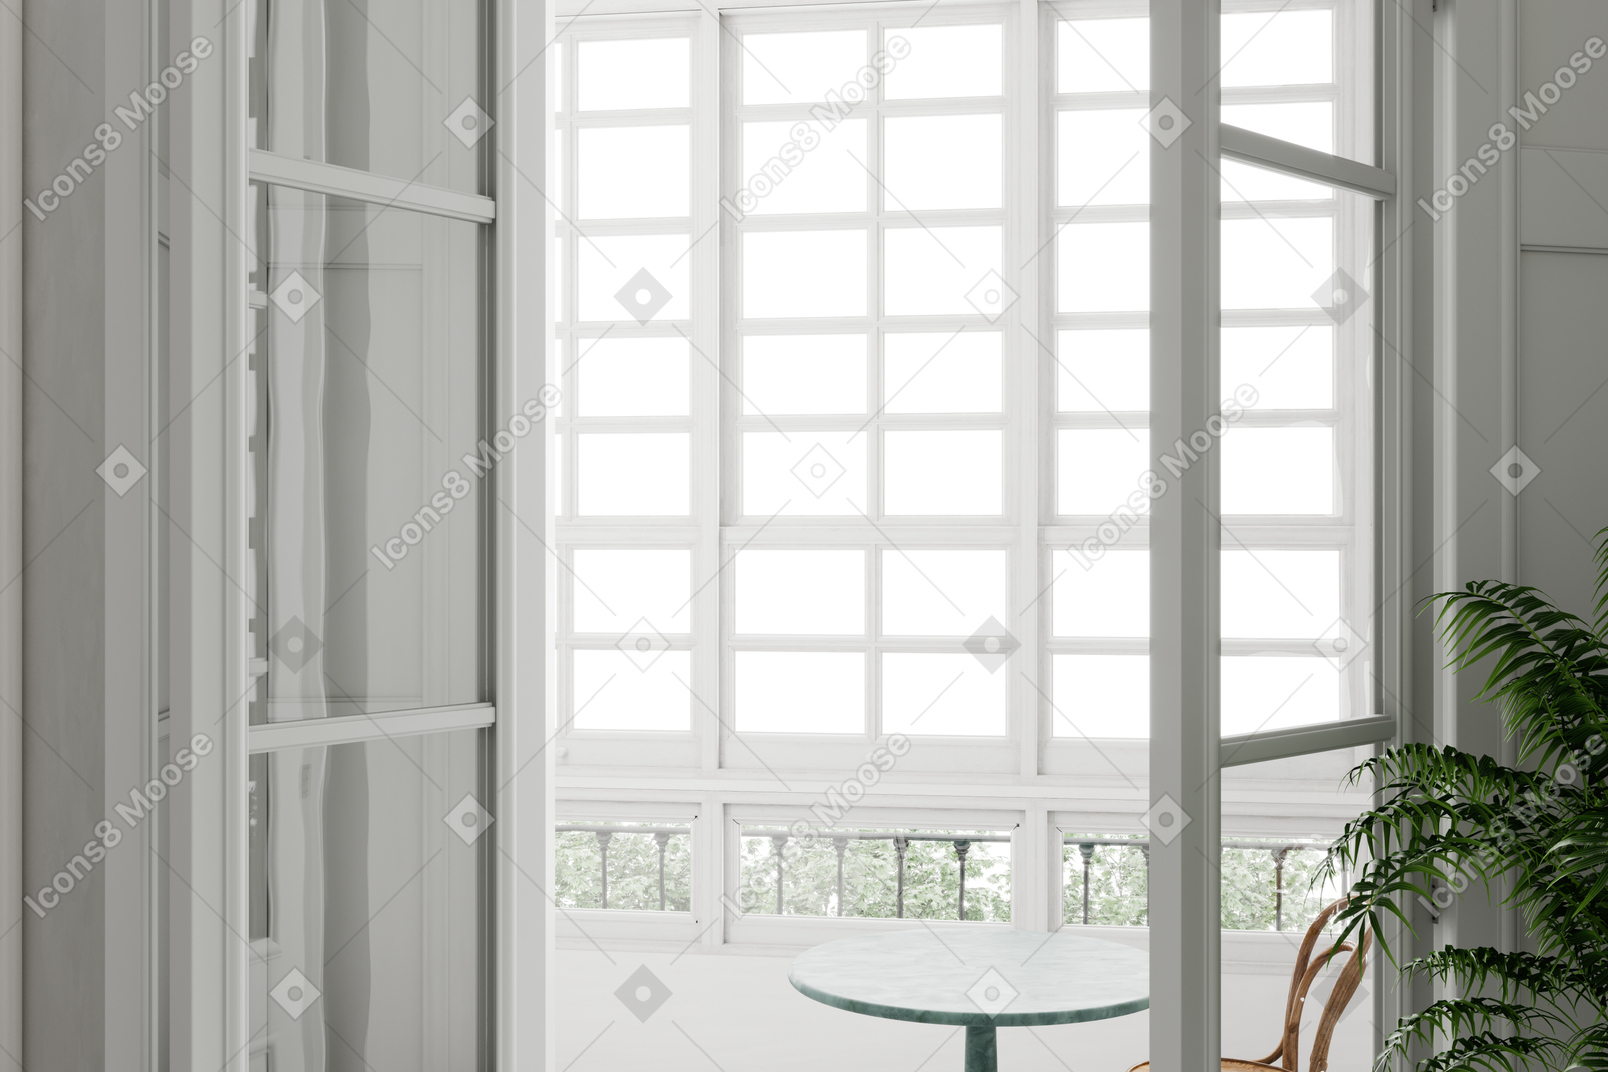 Glazed balcony with square window panes